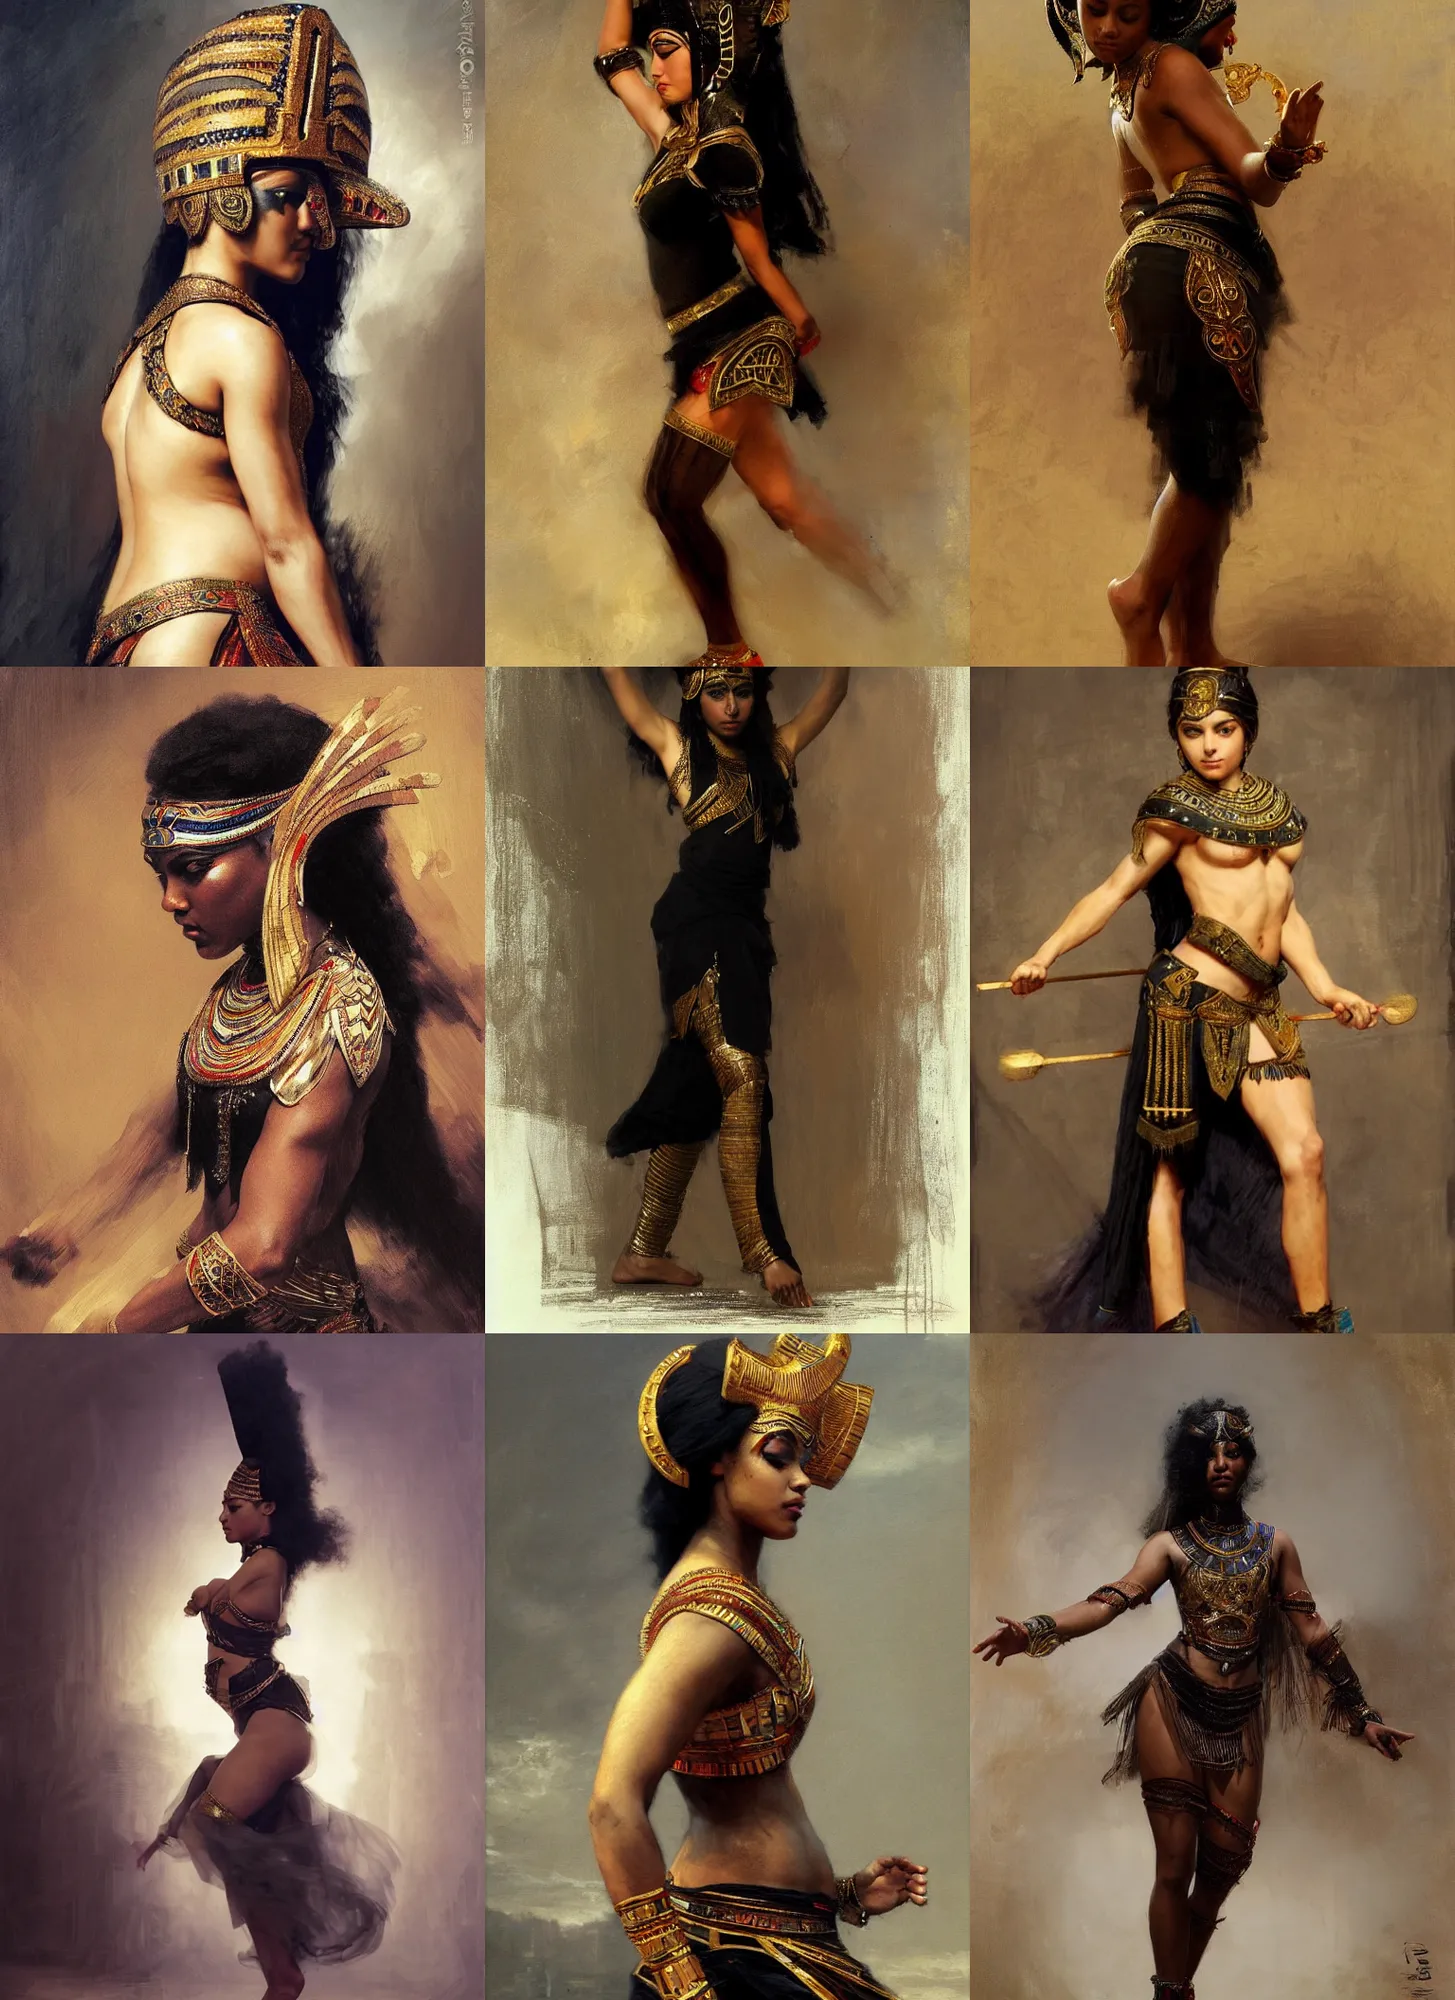 Prompt: black annasophia robb as egyptian dancer, intricate, elegant, highly detailed, artstation, concept art, sharp focus, ruan jia, jurgens, orientalism, bouguereau